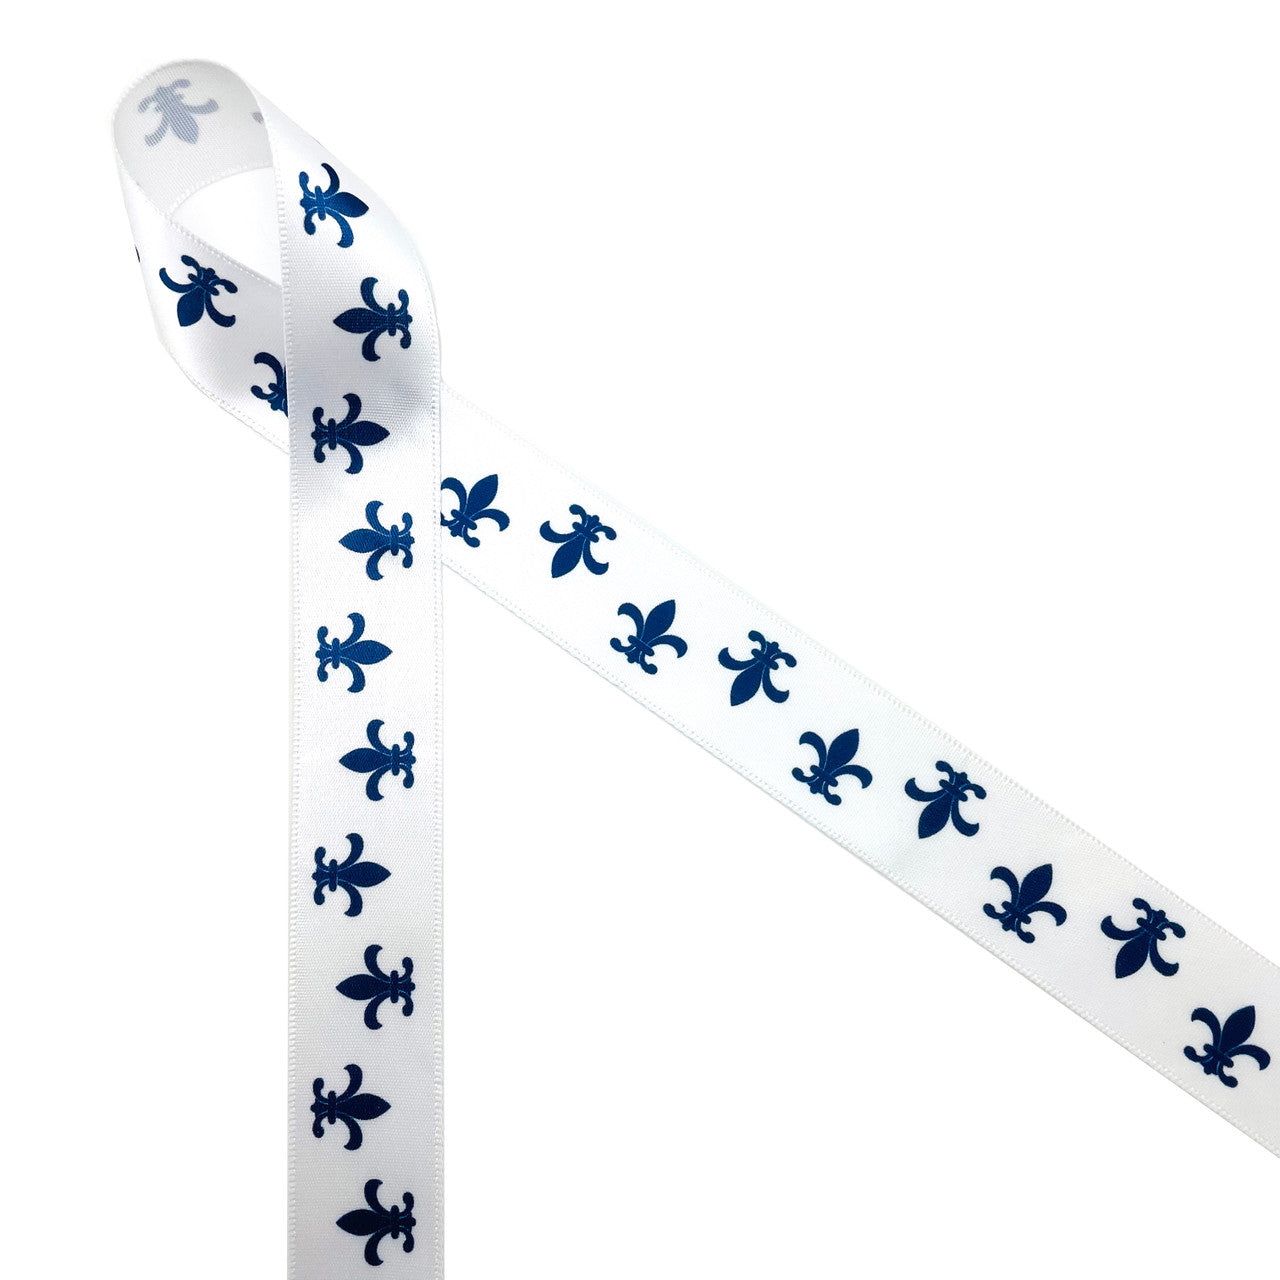 Fleur de Lis in navy blue on white 7/8" Single face satin ribbon, 10 Yards